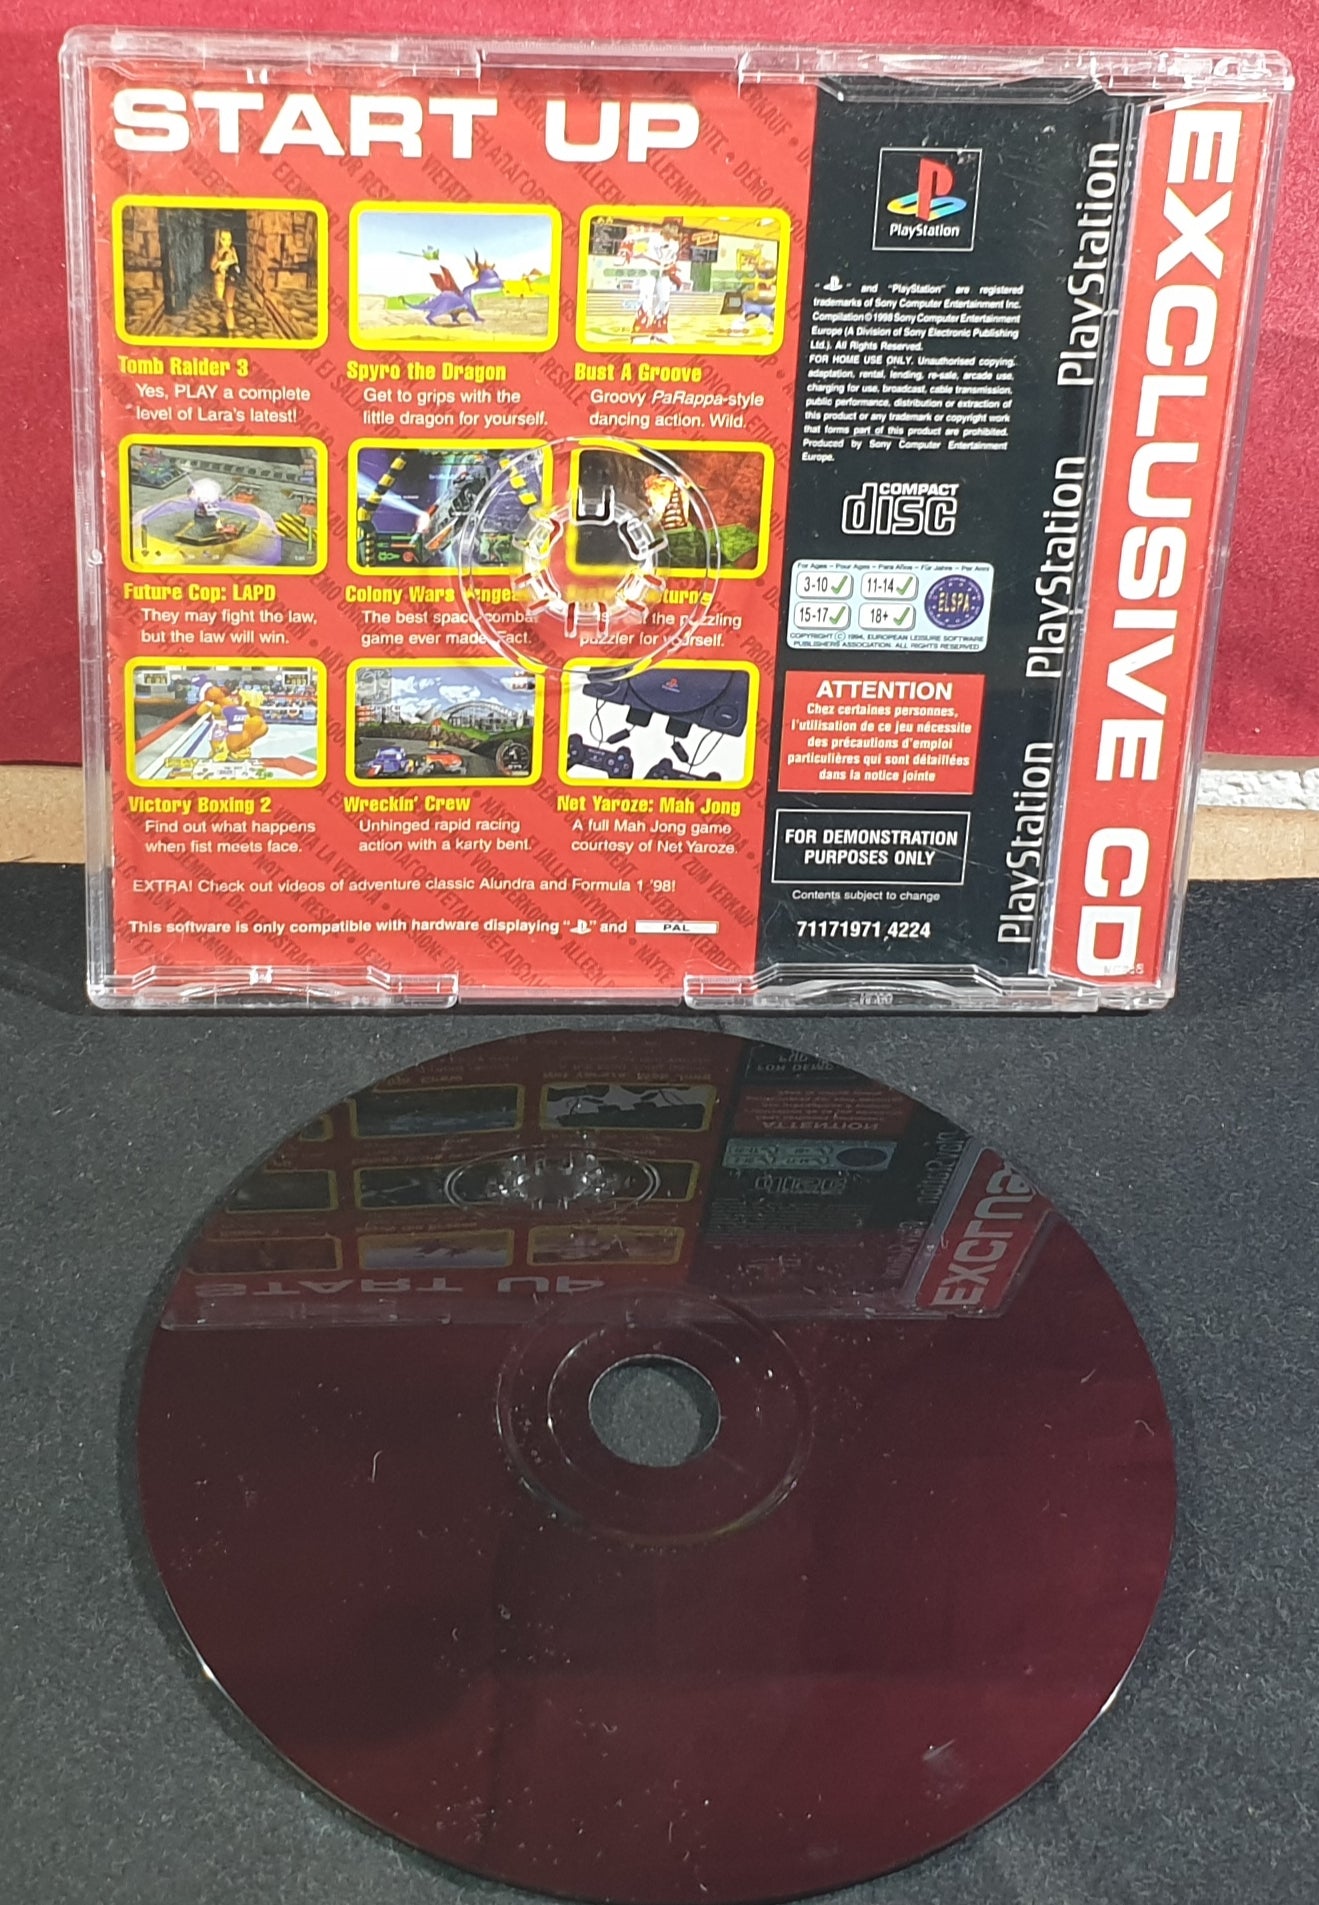 Sony Playstation 1 (PS1) Magazine Demo Disc 39